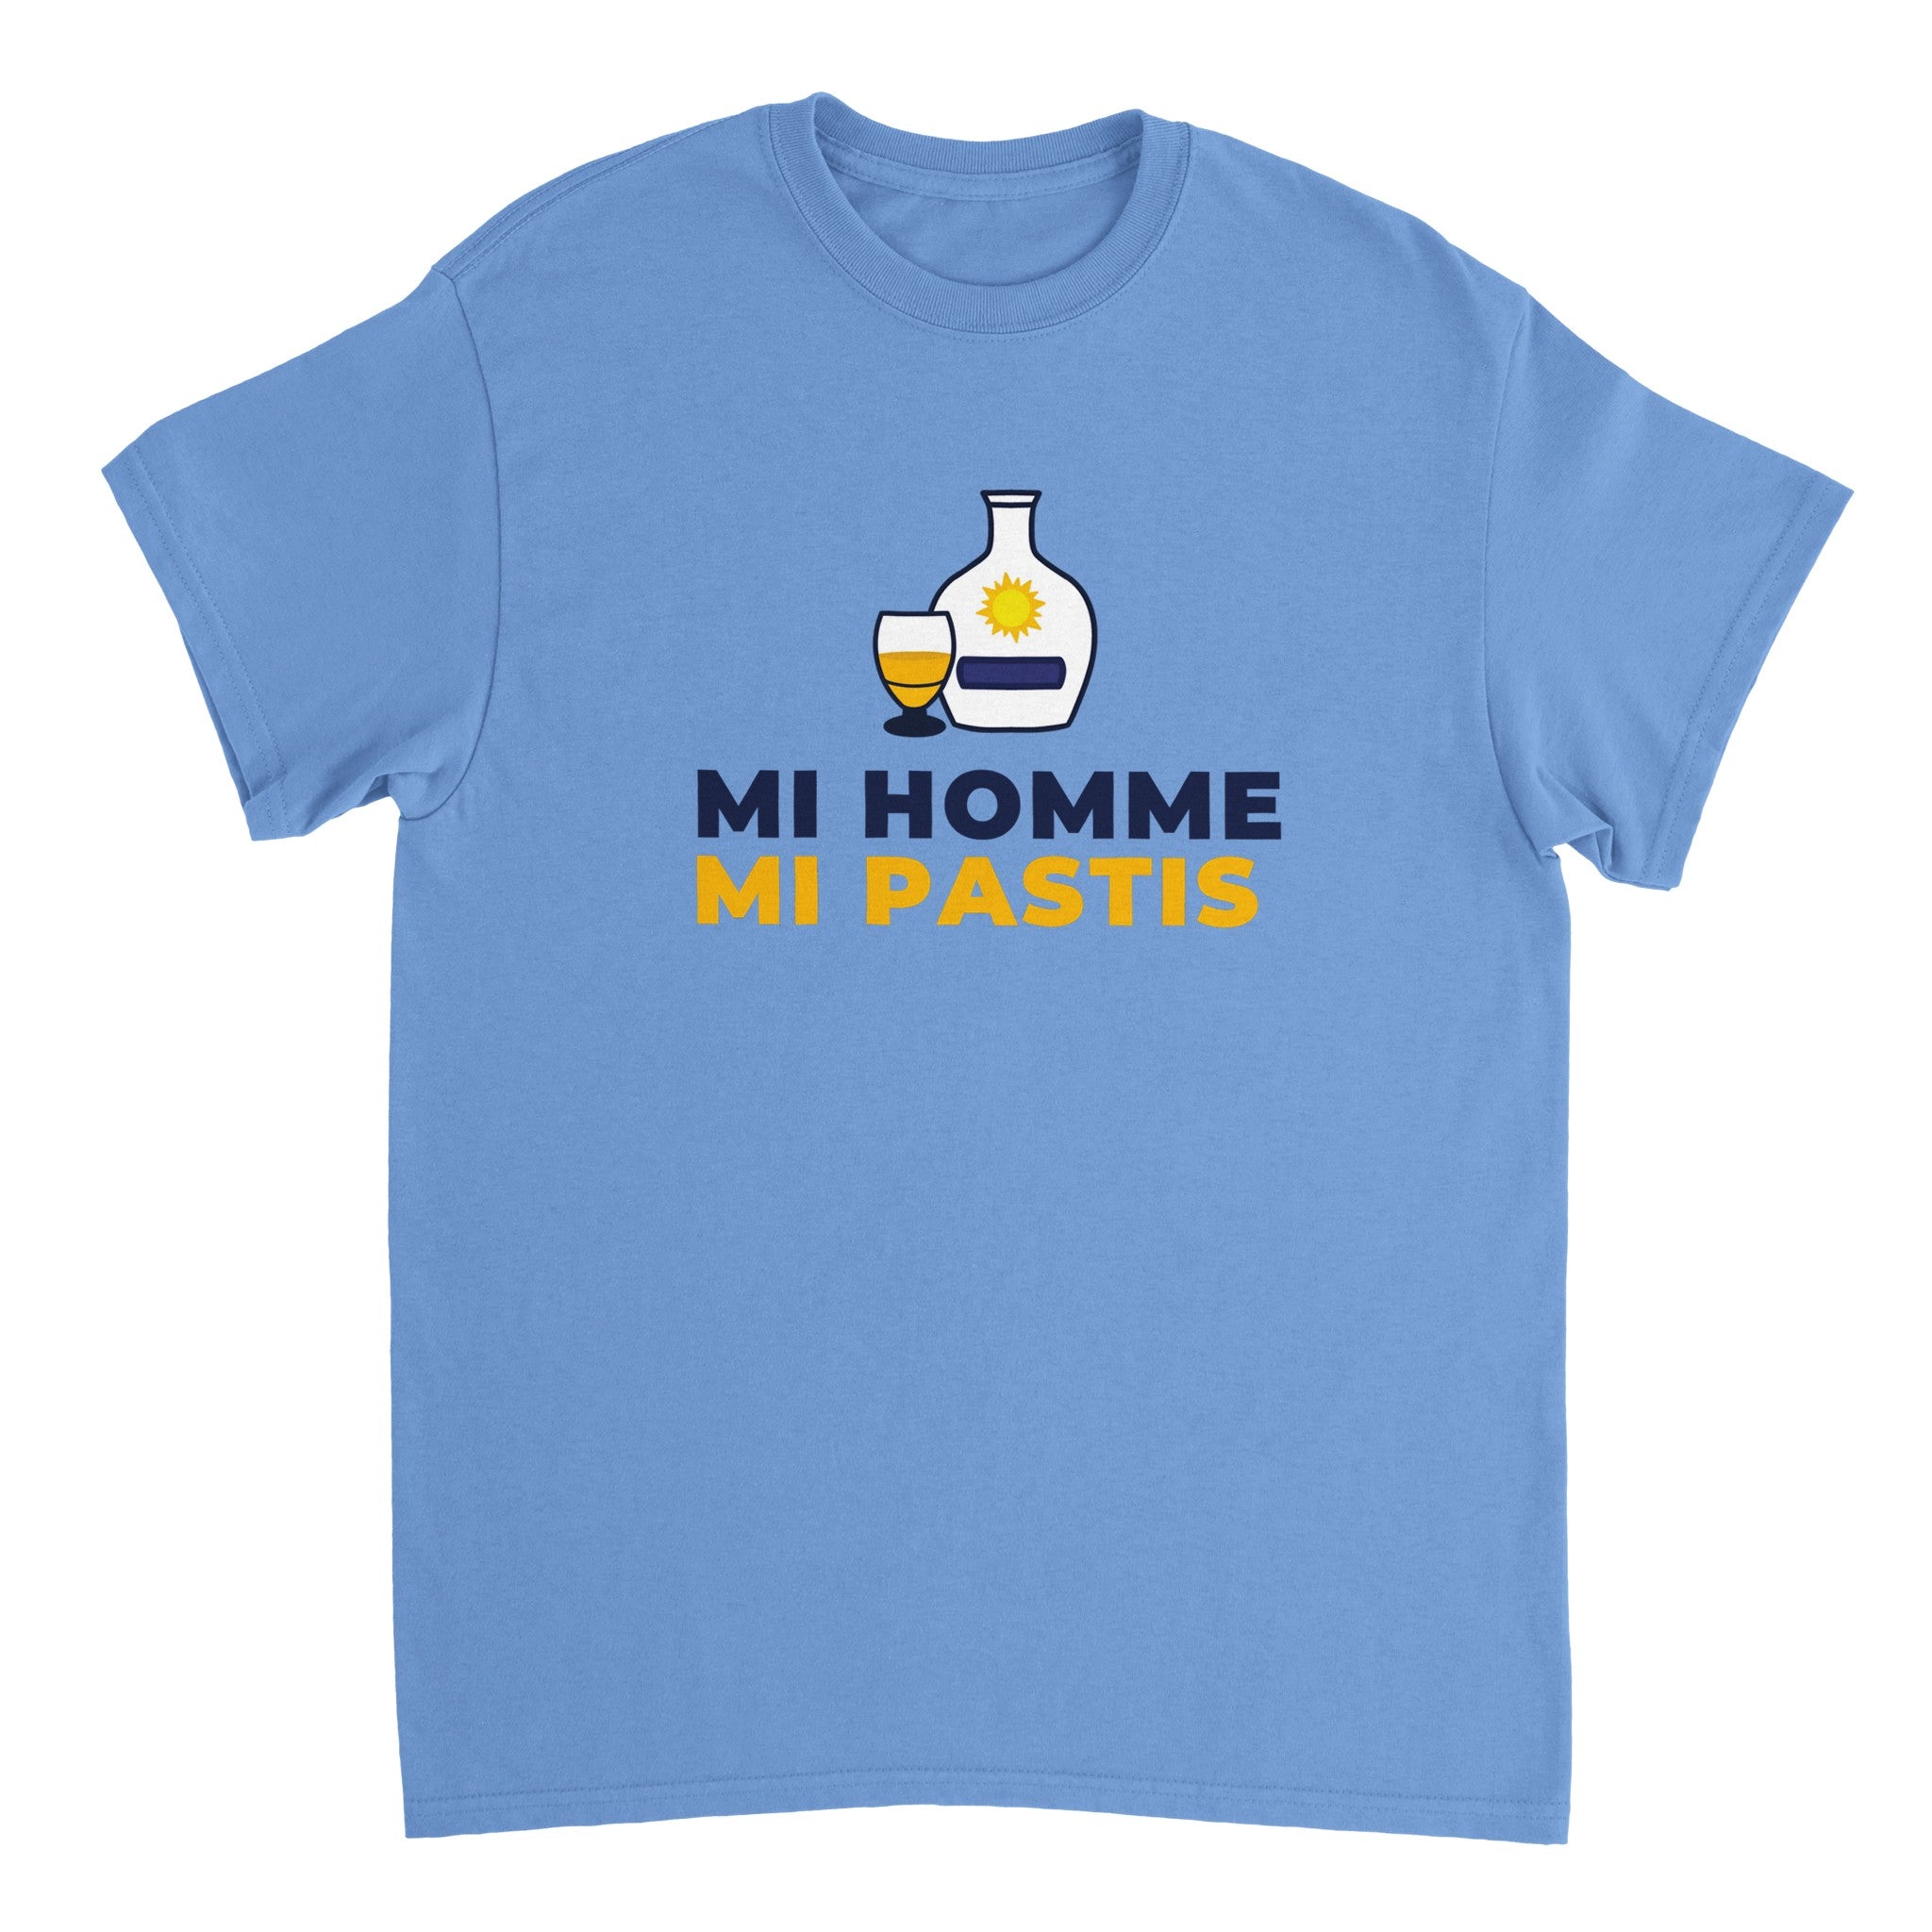 T-shirt Pastis "Mi homme Mi pastis" | Mixte